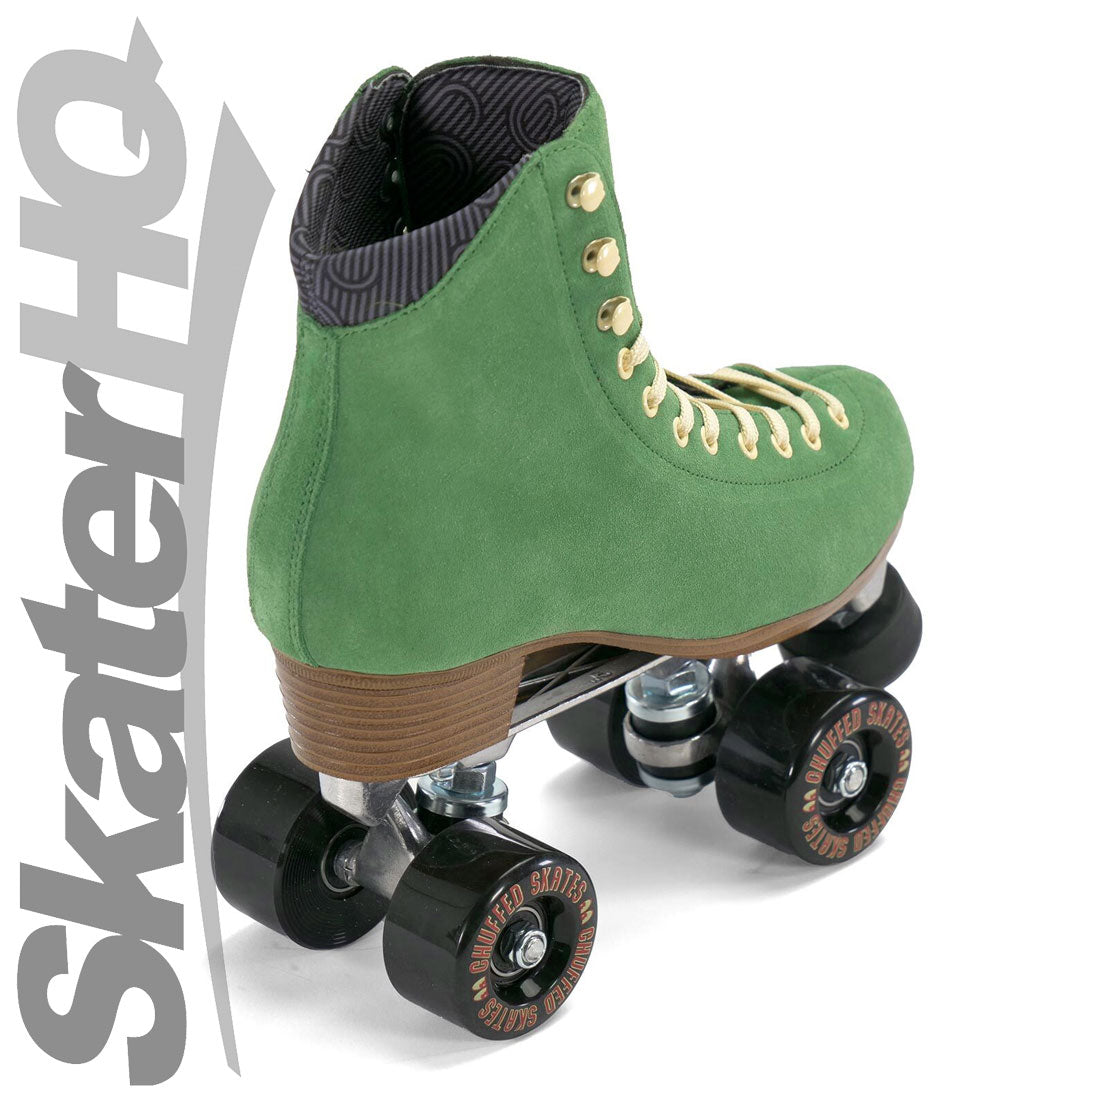 Chuffed Wanderer Olive Green 7US Roller Skates